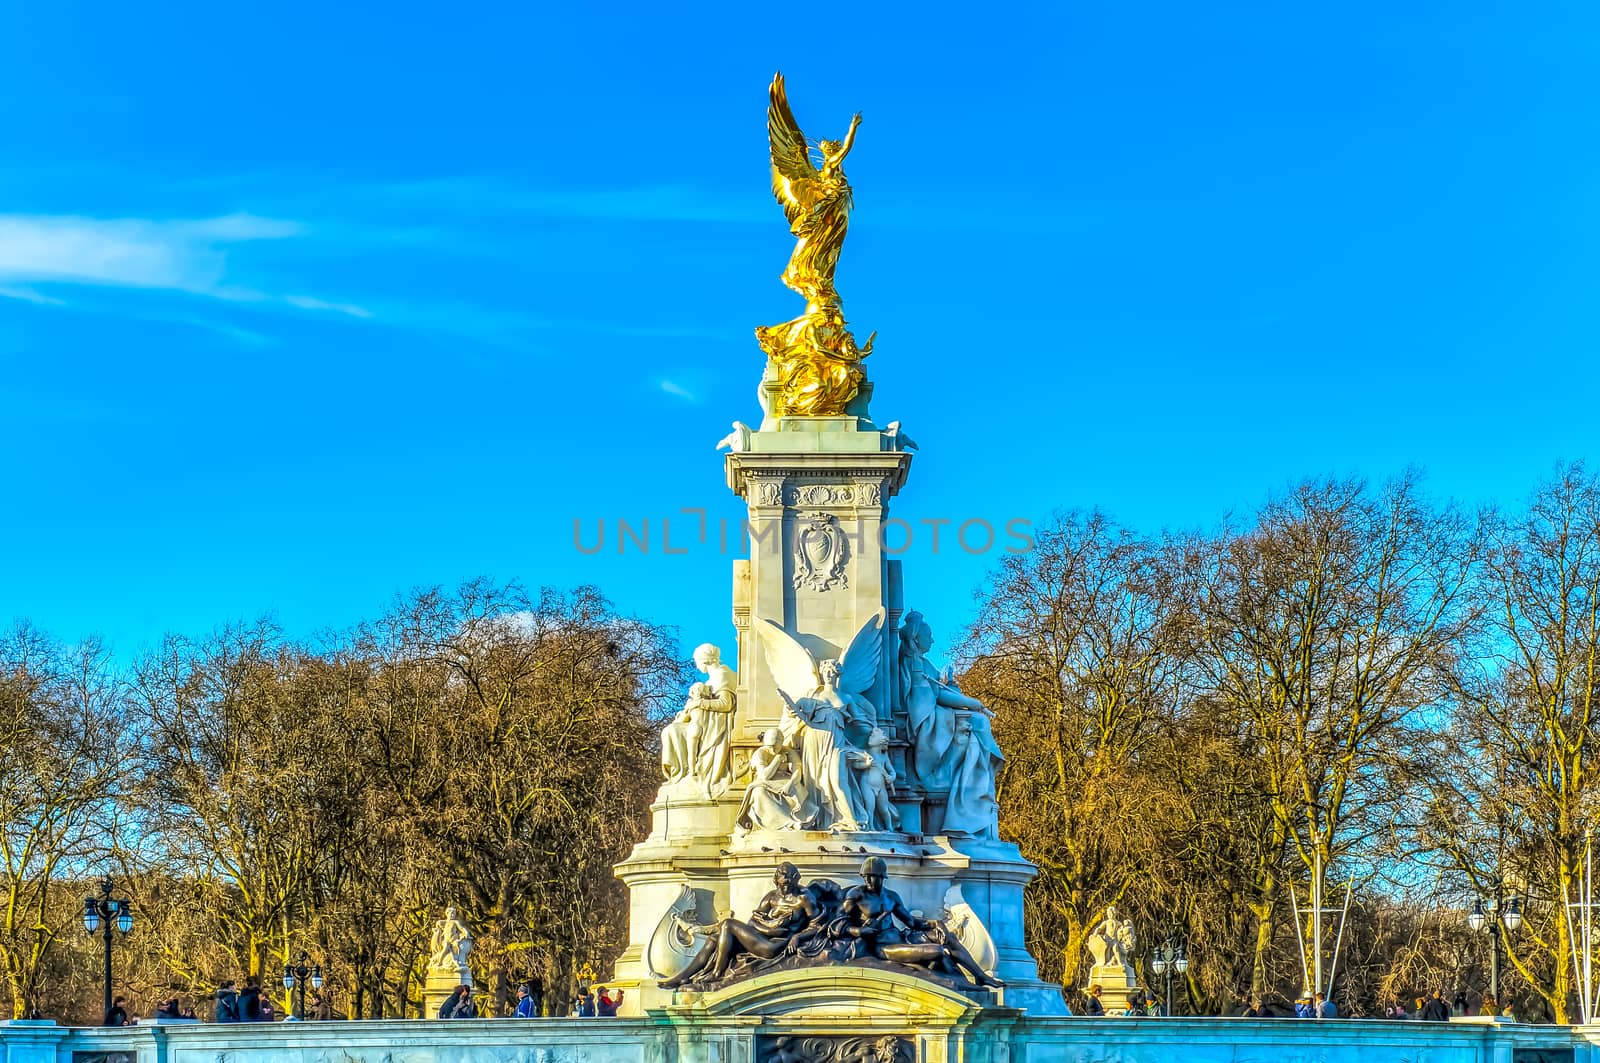 Architecture of Queen Victoria Memorial Statue by PhotoLondonUK